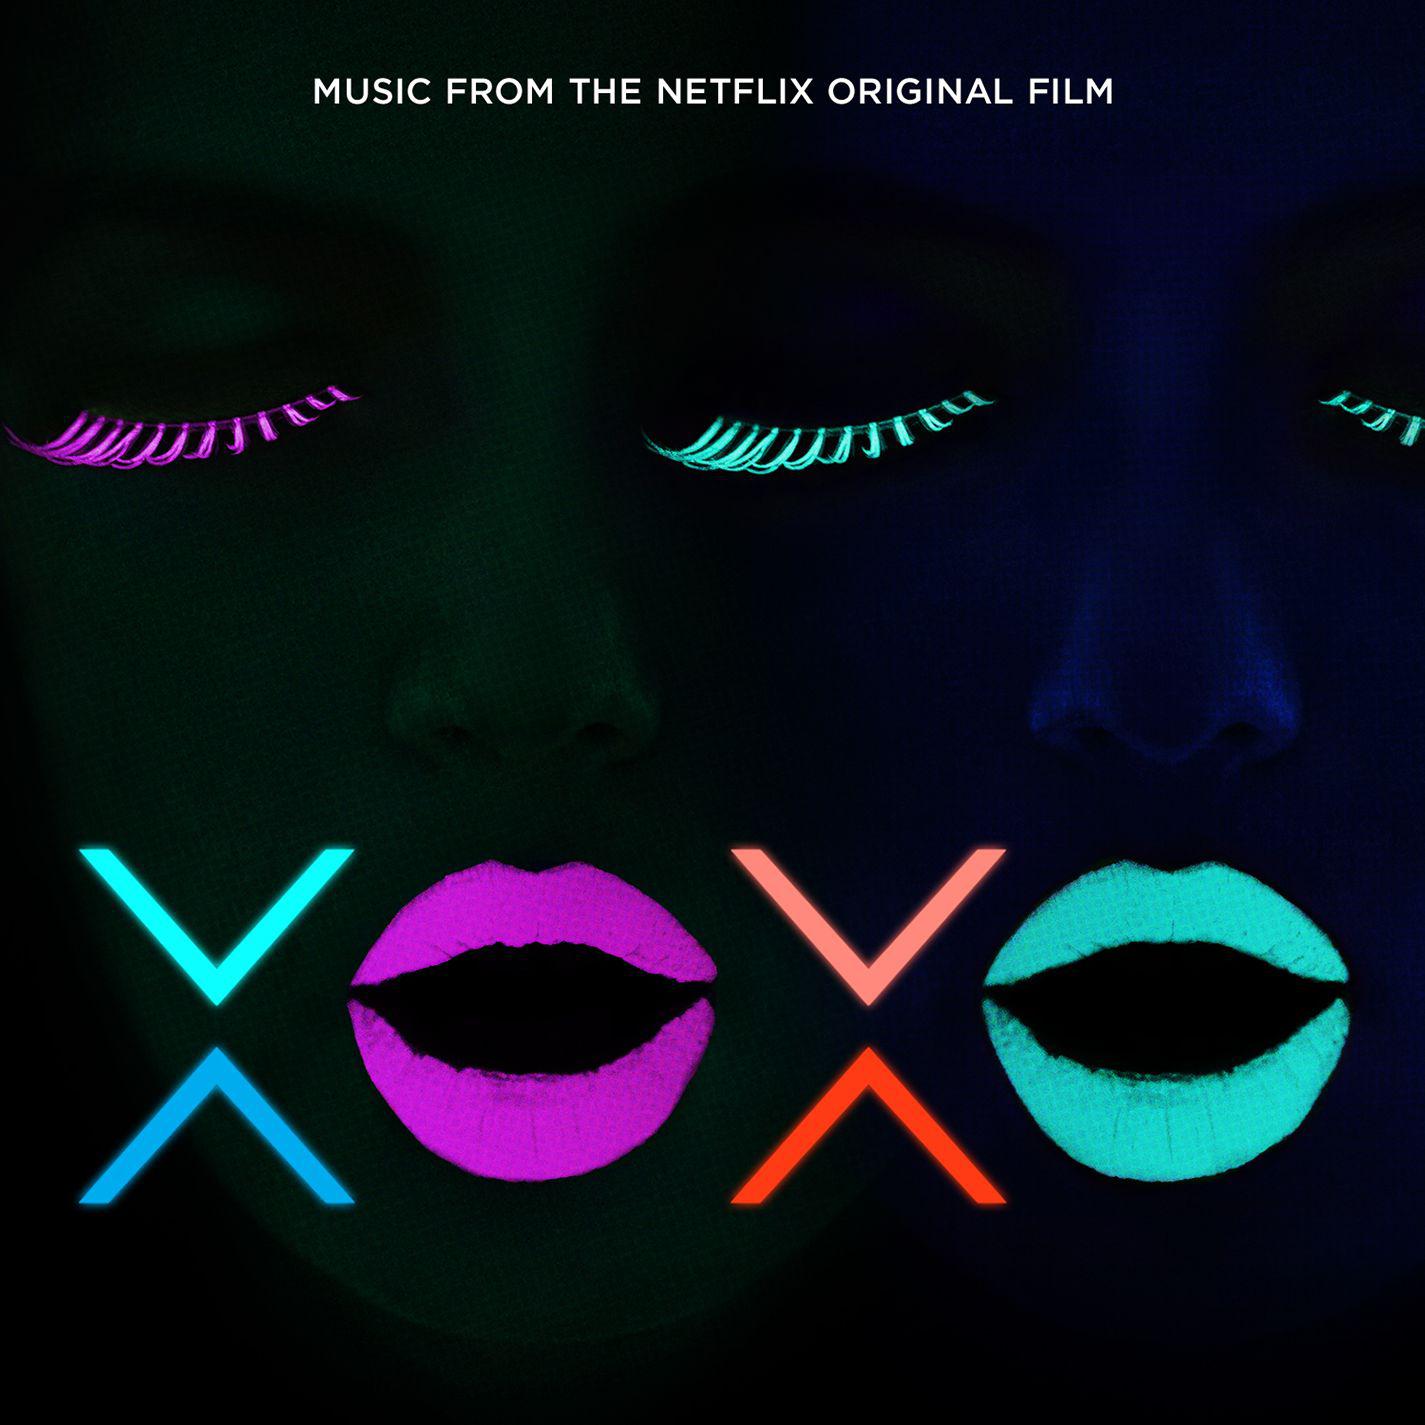 XOXO (Music from the Netflix Original Film)